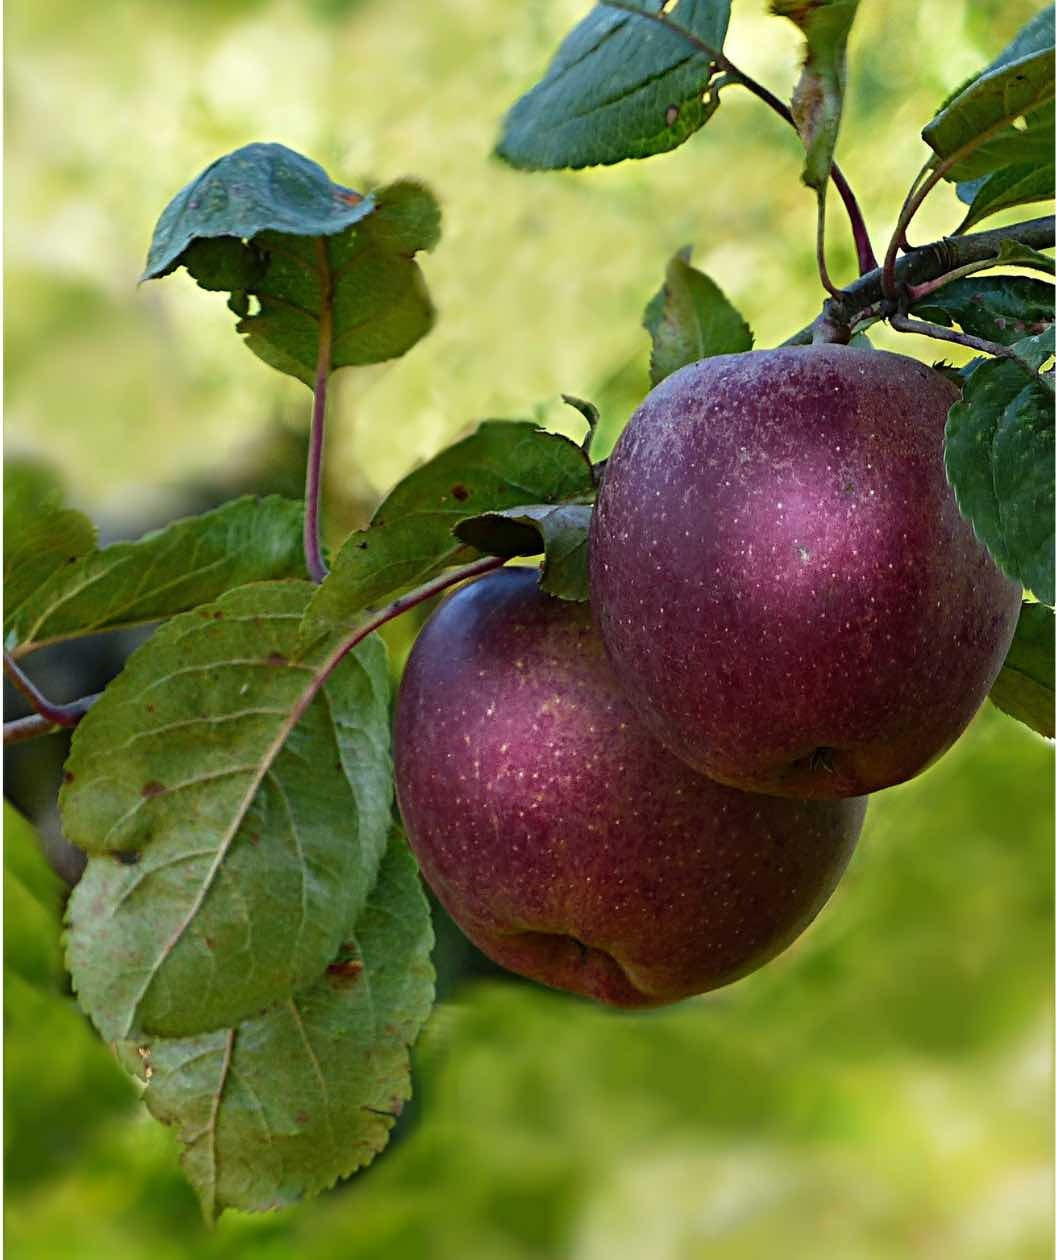 Organic Black Arkansas Apples